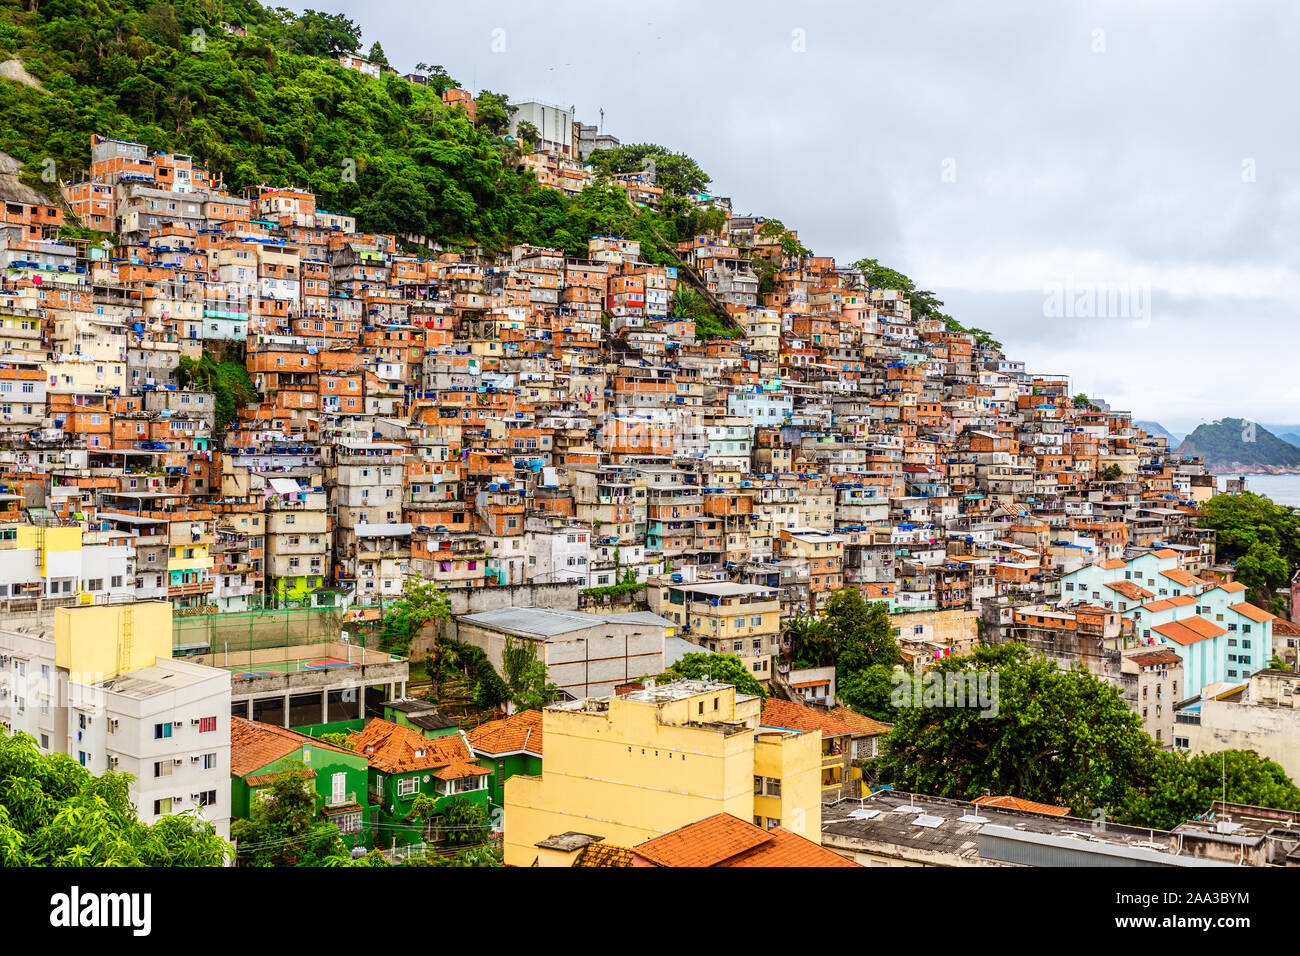 Colori brasiliani favelas baraccopoli sulla collina, Rio de Janeiro, Brasile Foto Stock